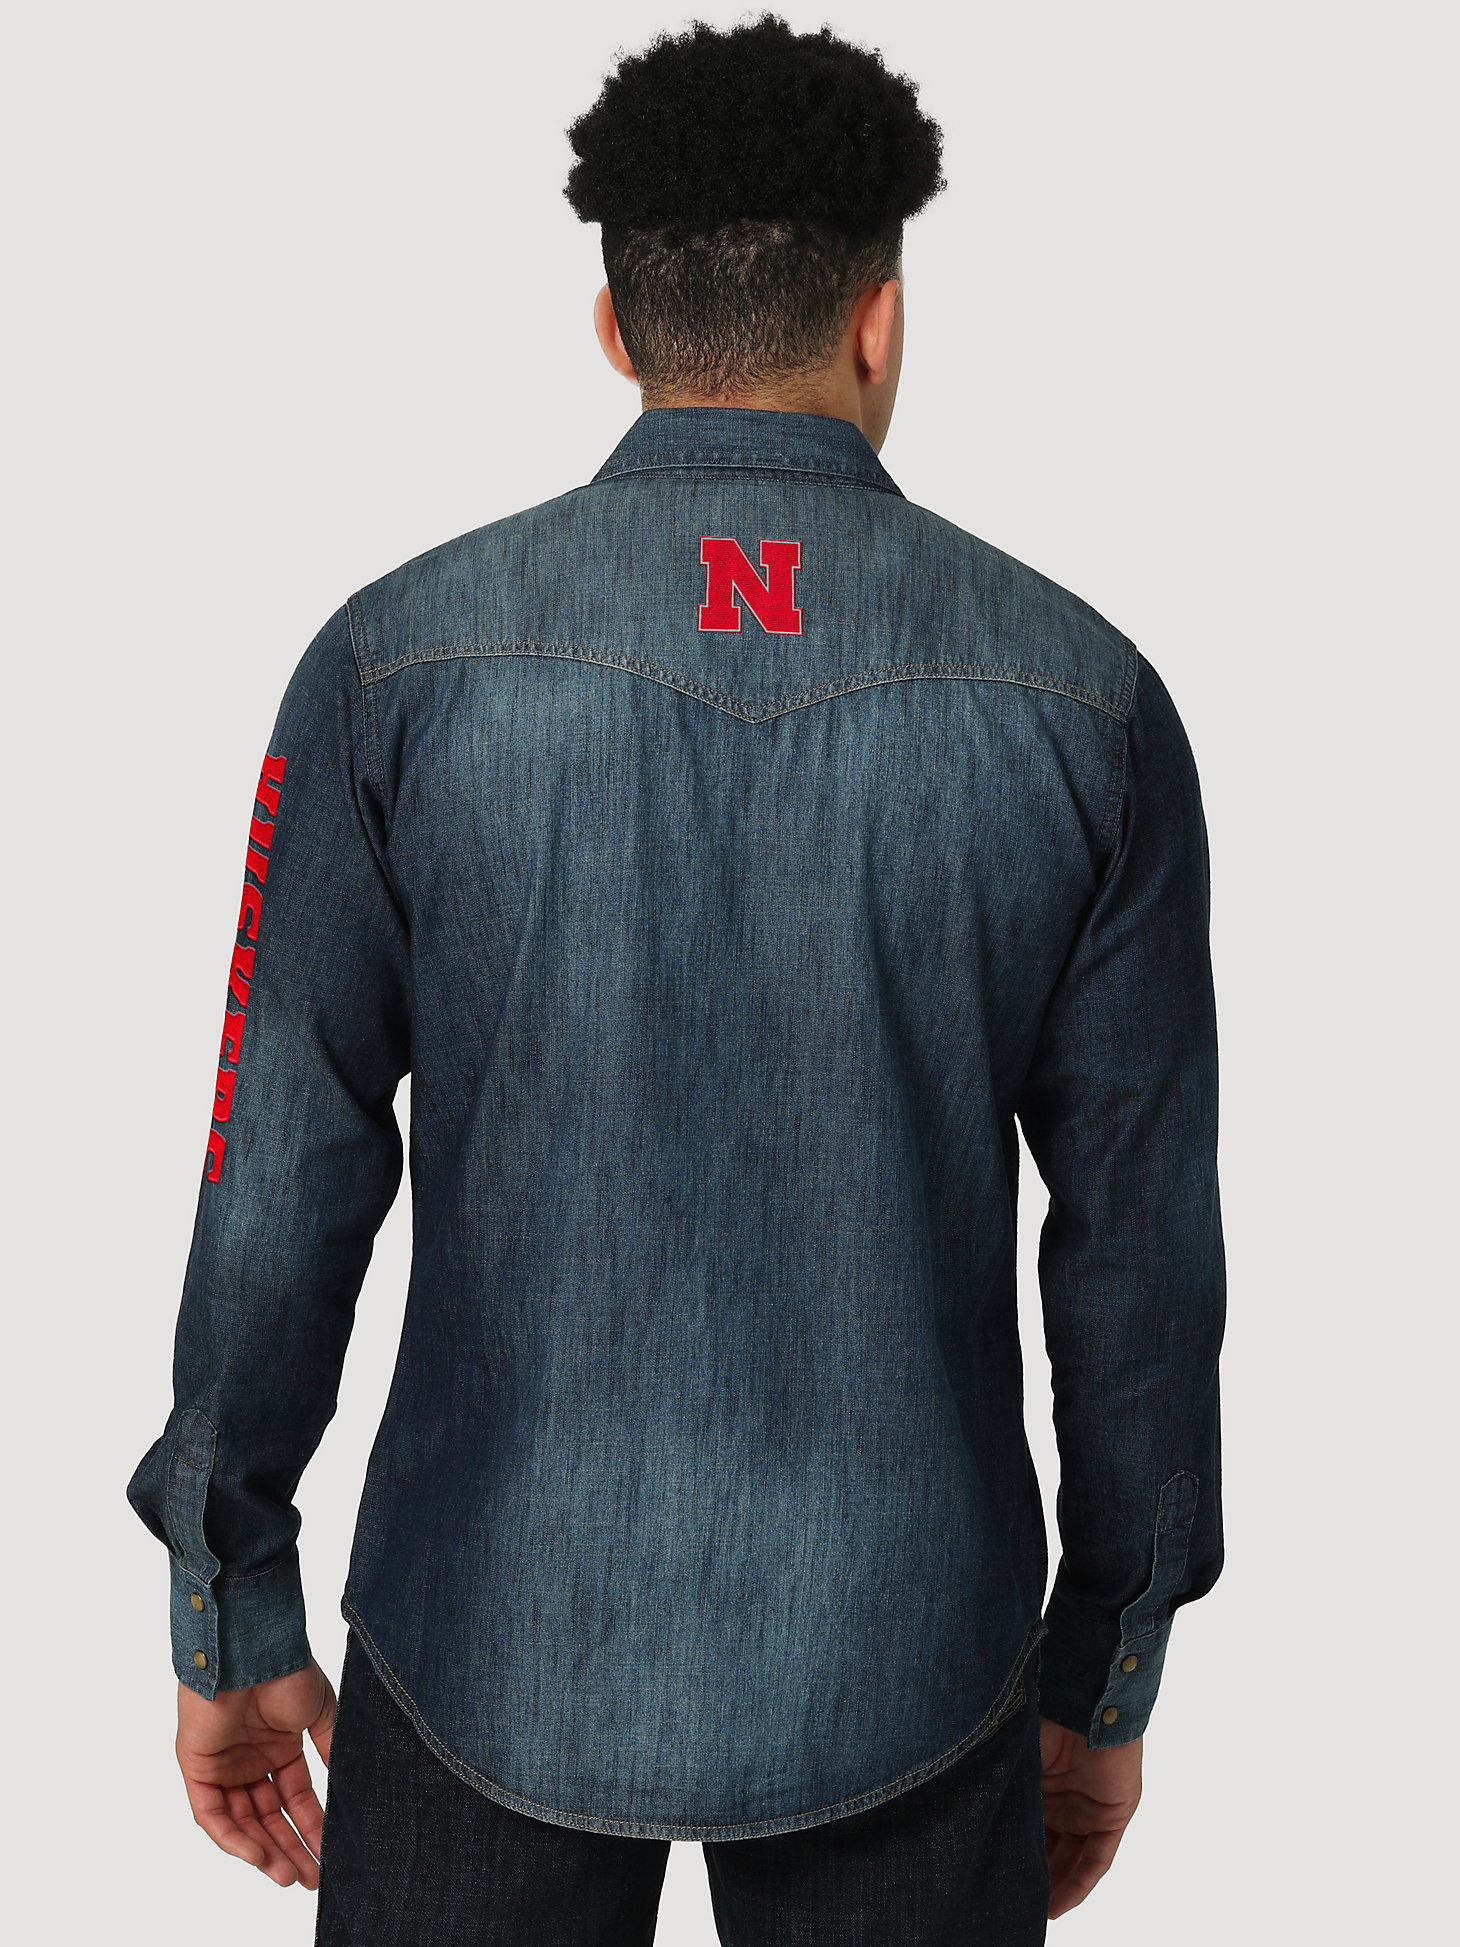 Men's Wrangler Collegiate Denim Western Snap Shirt in University of Nebraska alternative view 1